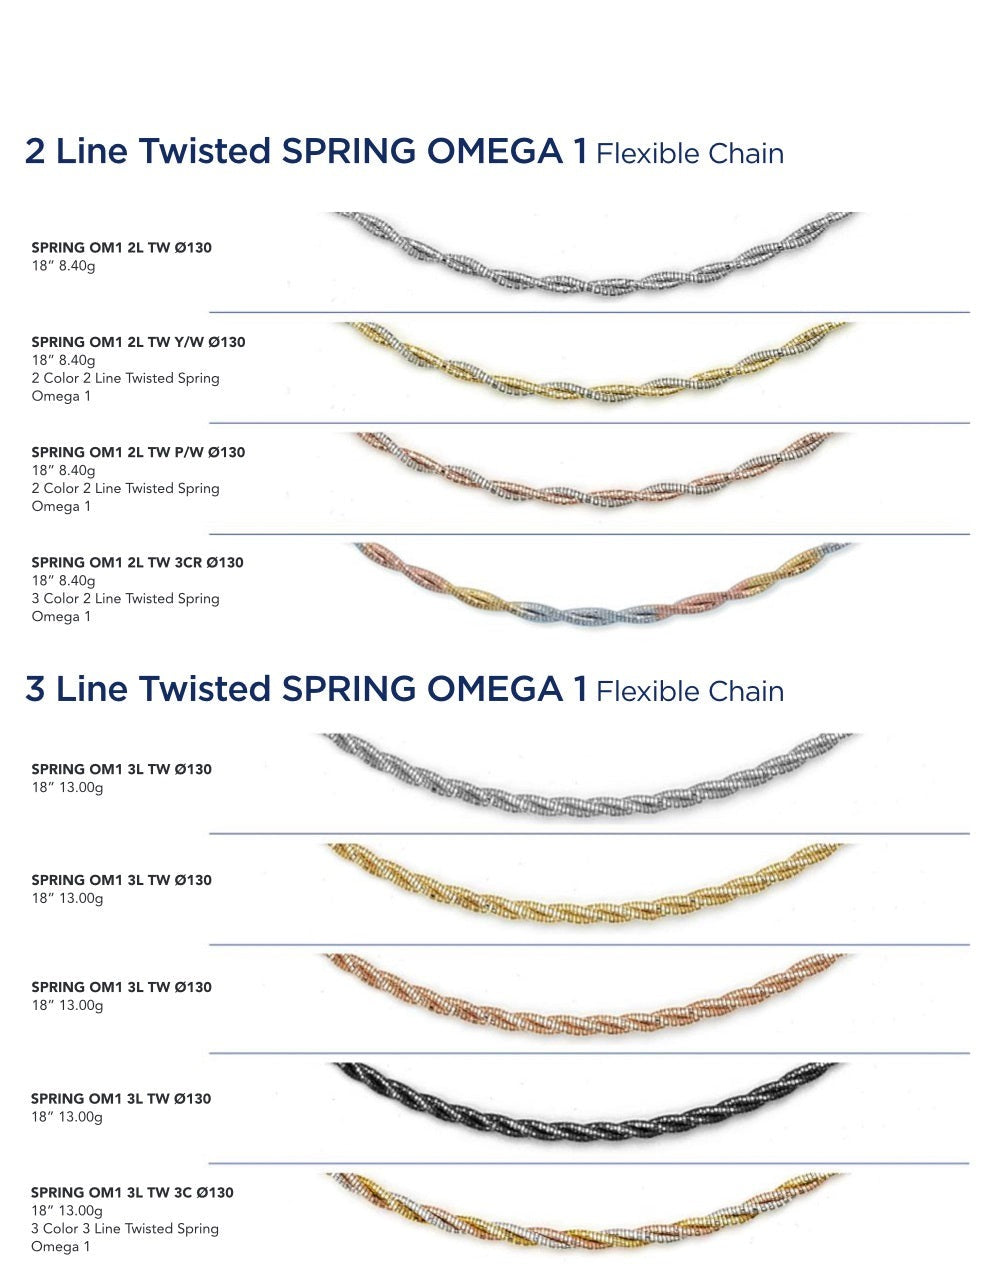 2 Line Twisted Spring Omega 1 Flexible / 3 Line Twisted Spring Omega 1 Flexible